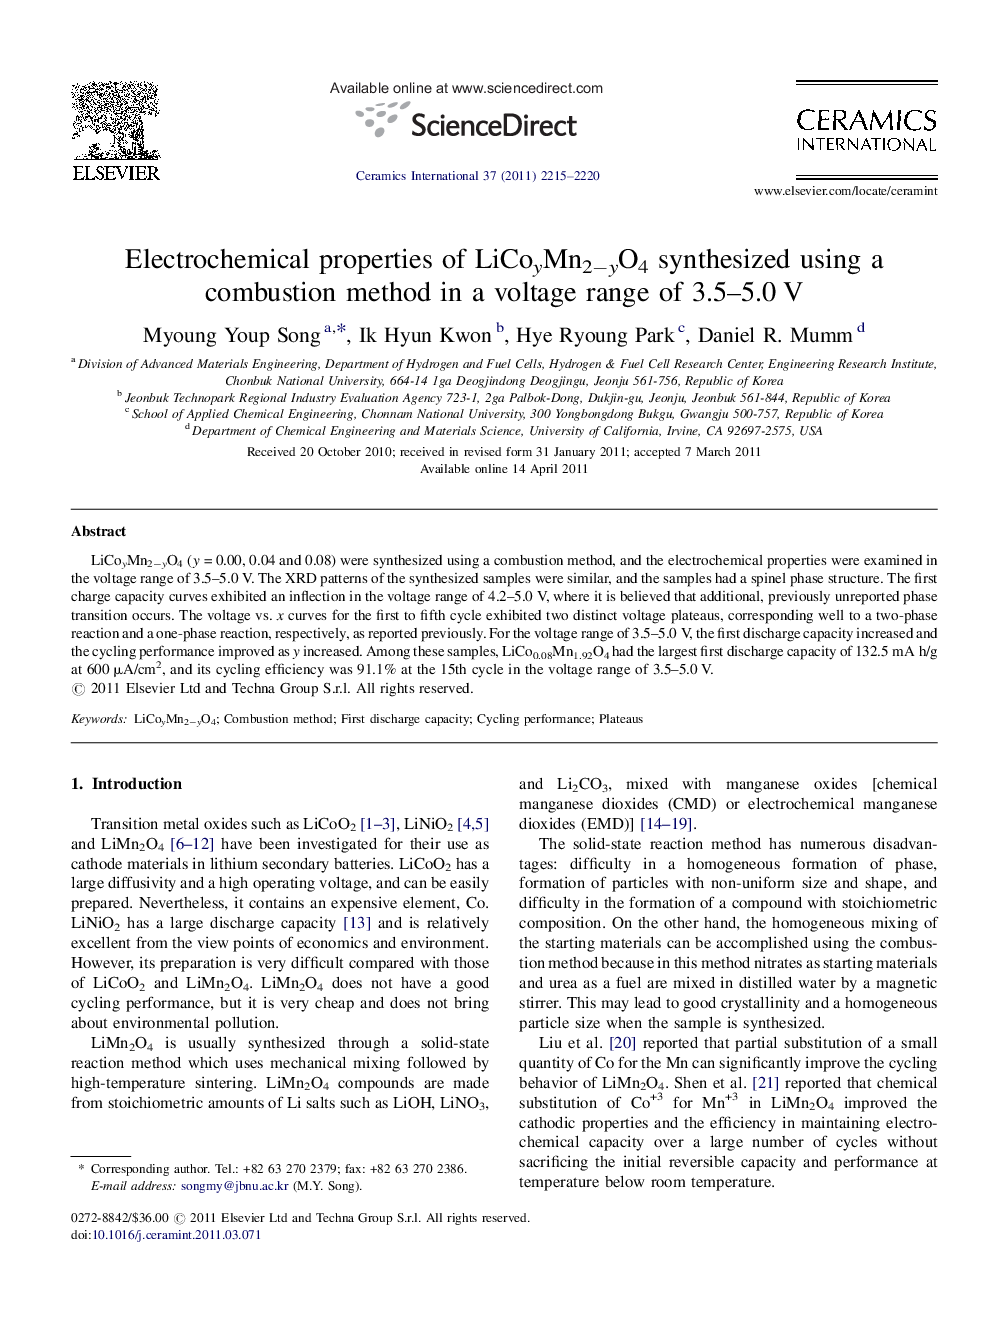 Electrochemical properties of LiCoyMn2âyO4 synthesized using a combustion method in a voltage range of 3.5-5.0Â V